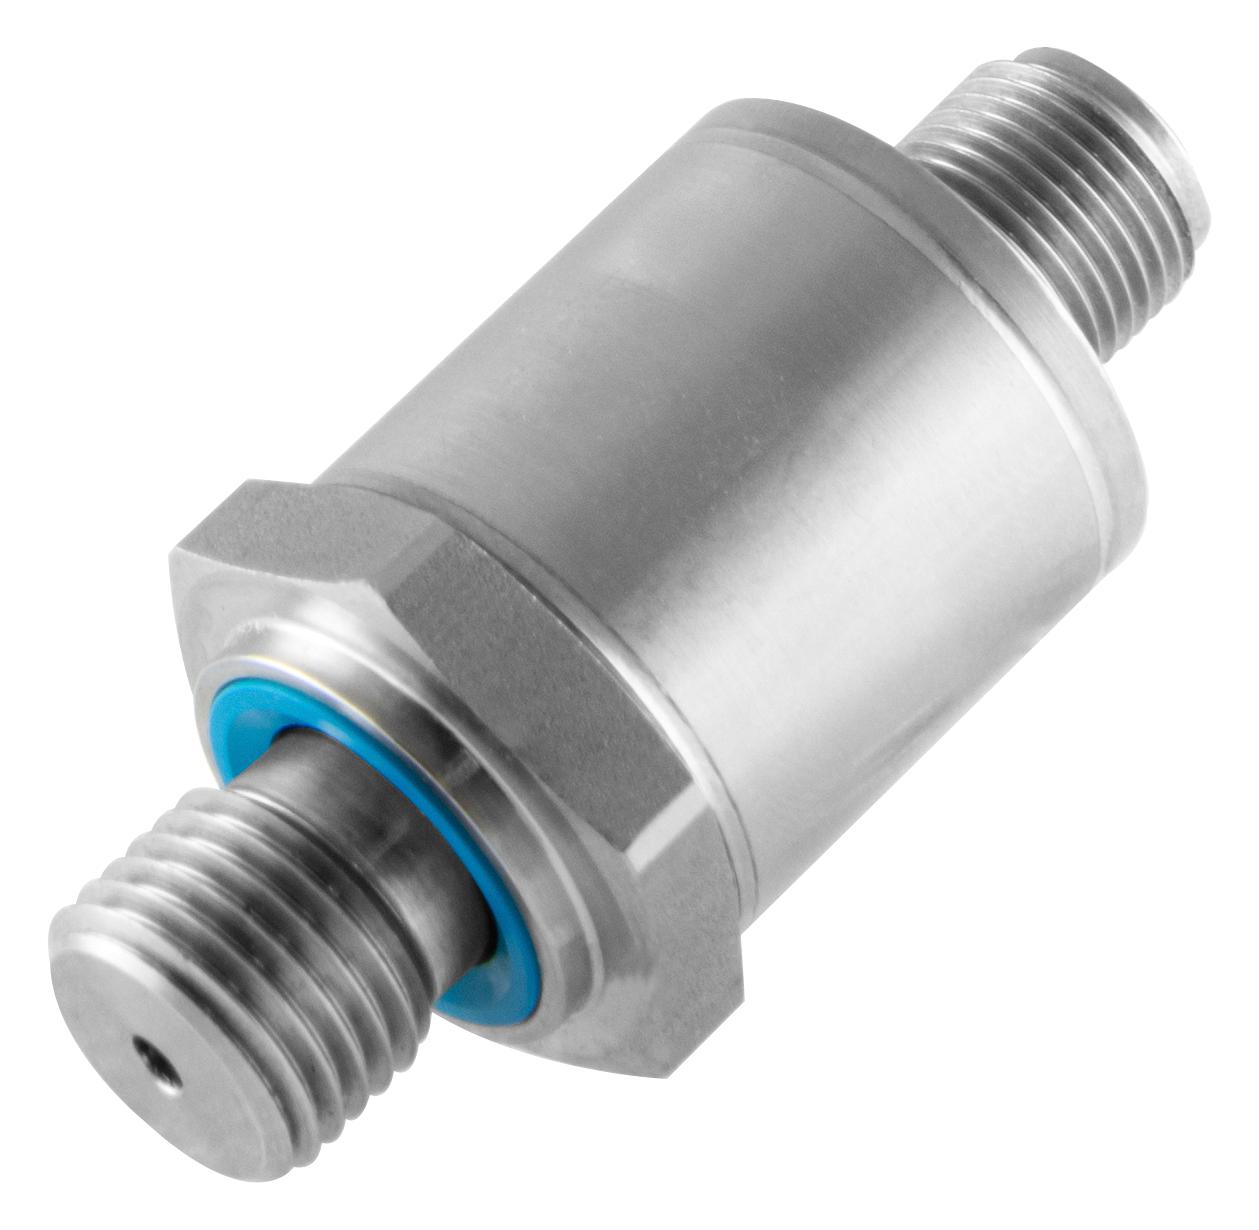 Sensata Pte7300-34Dm-0B200Sn Pressure Sensor, 200Bar, Seal Gauge, I2C